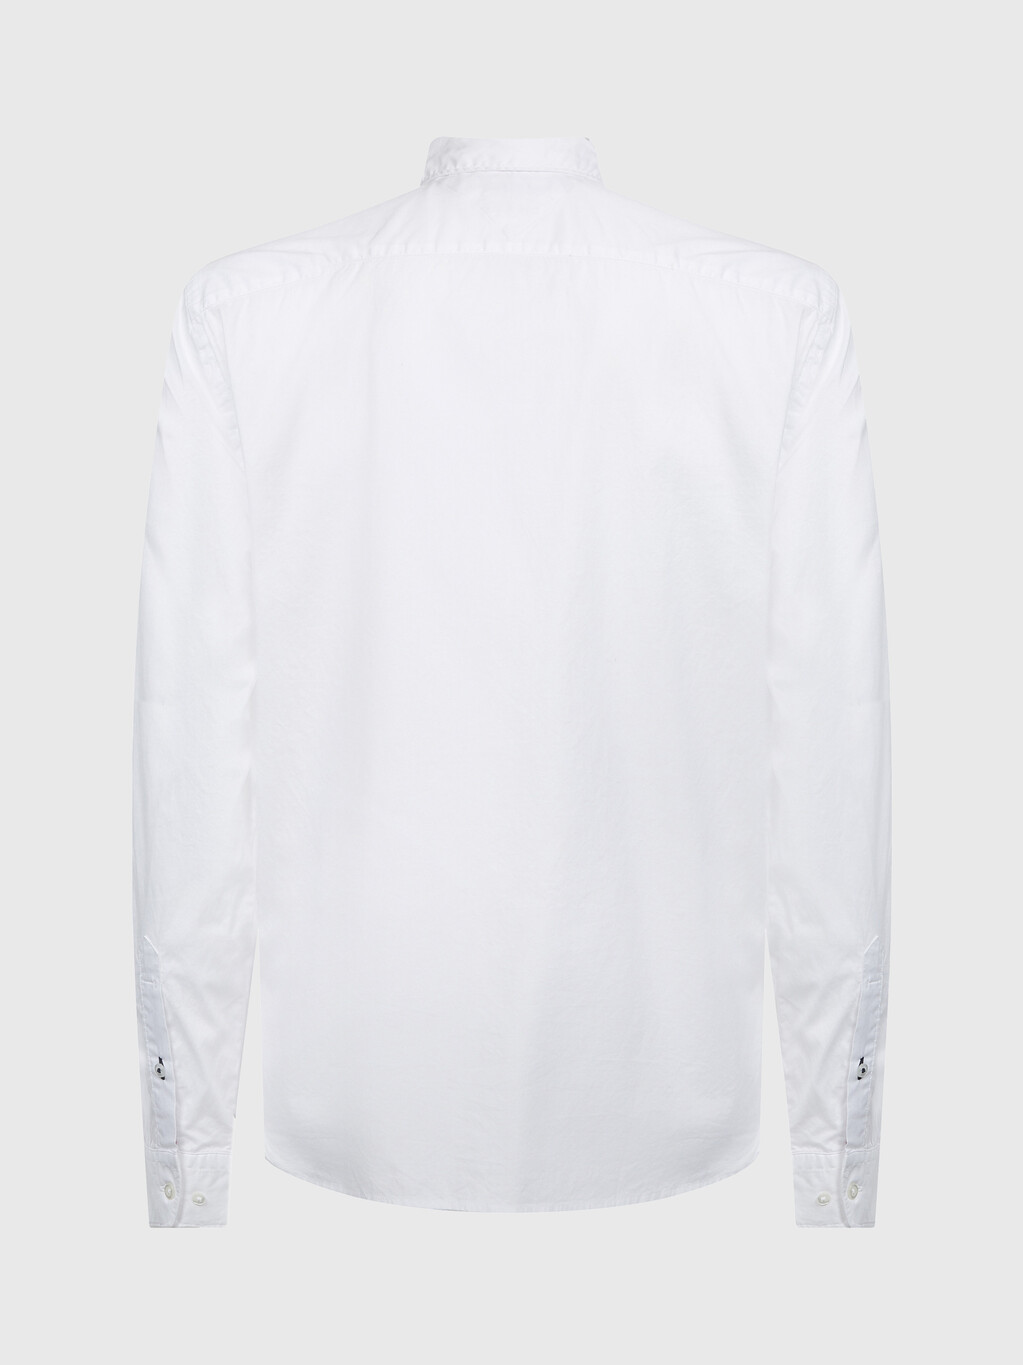 Core Flex 彈性府綢襯衫, White, hi-res